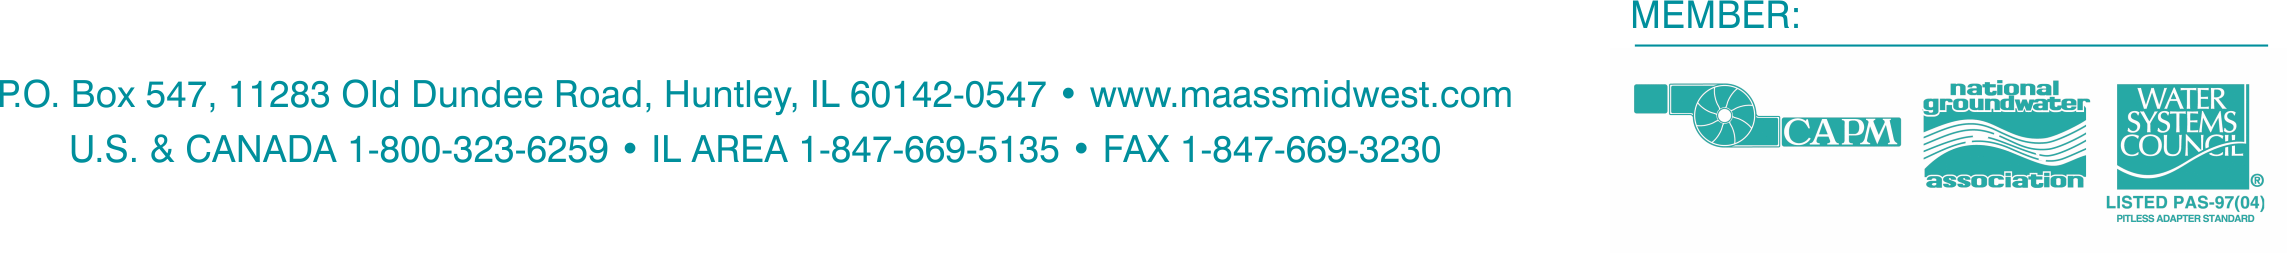 Maass Midwest Contact Info